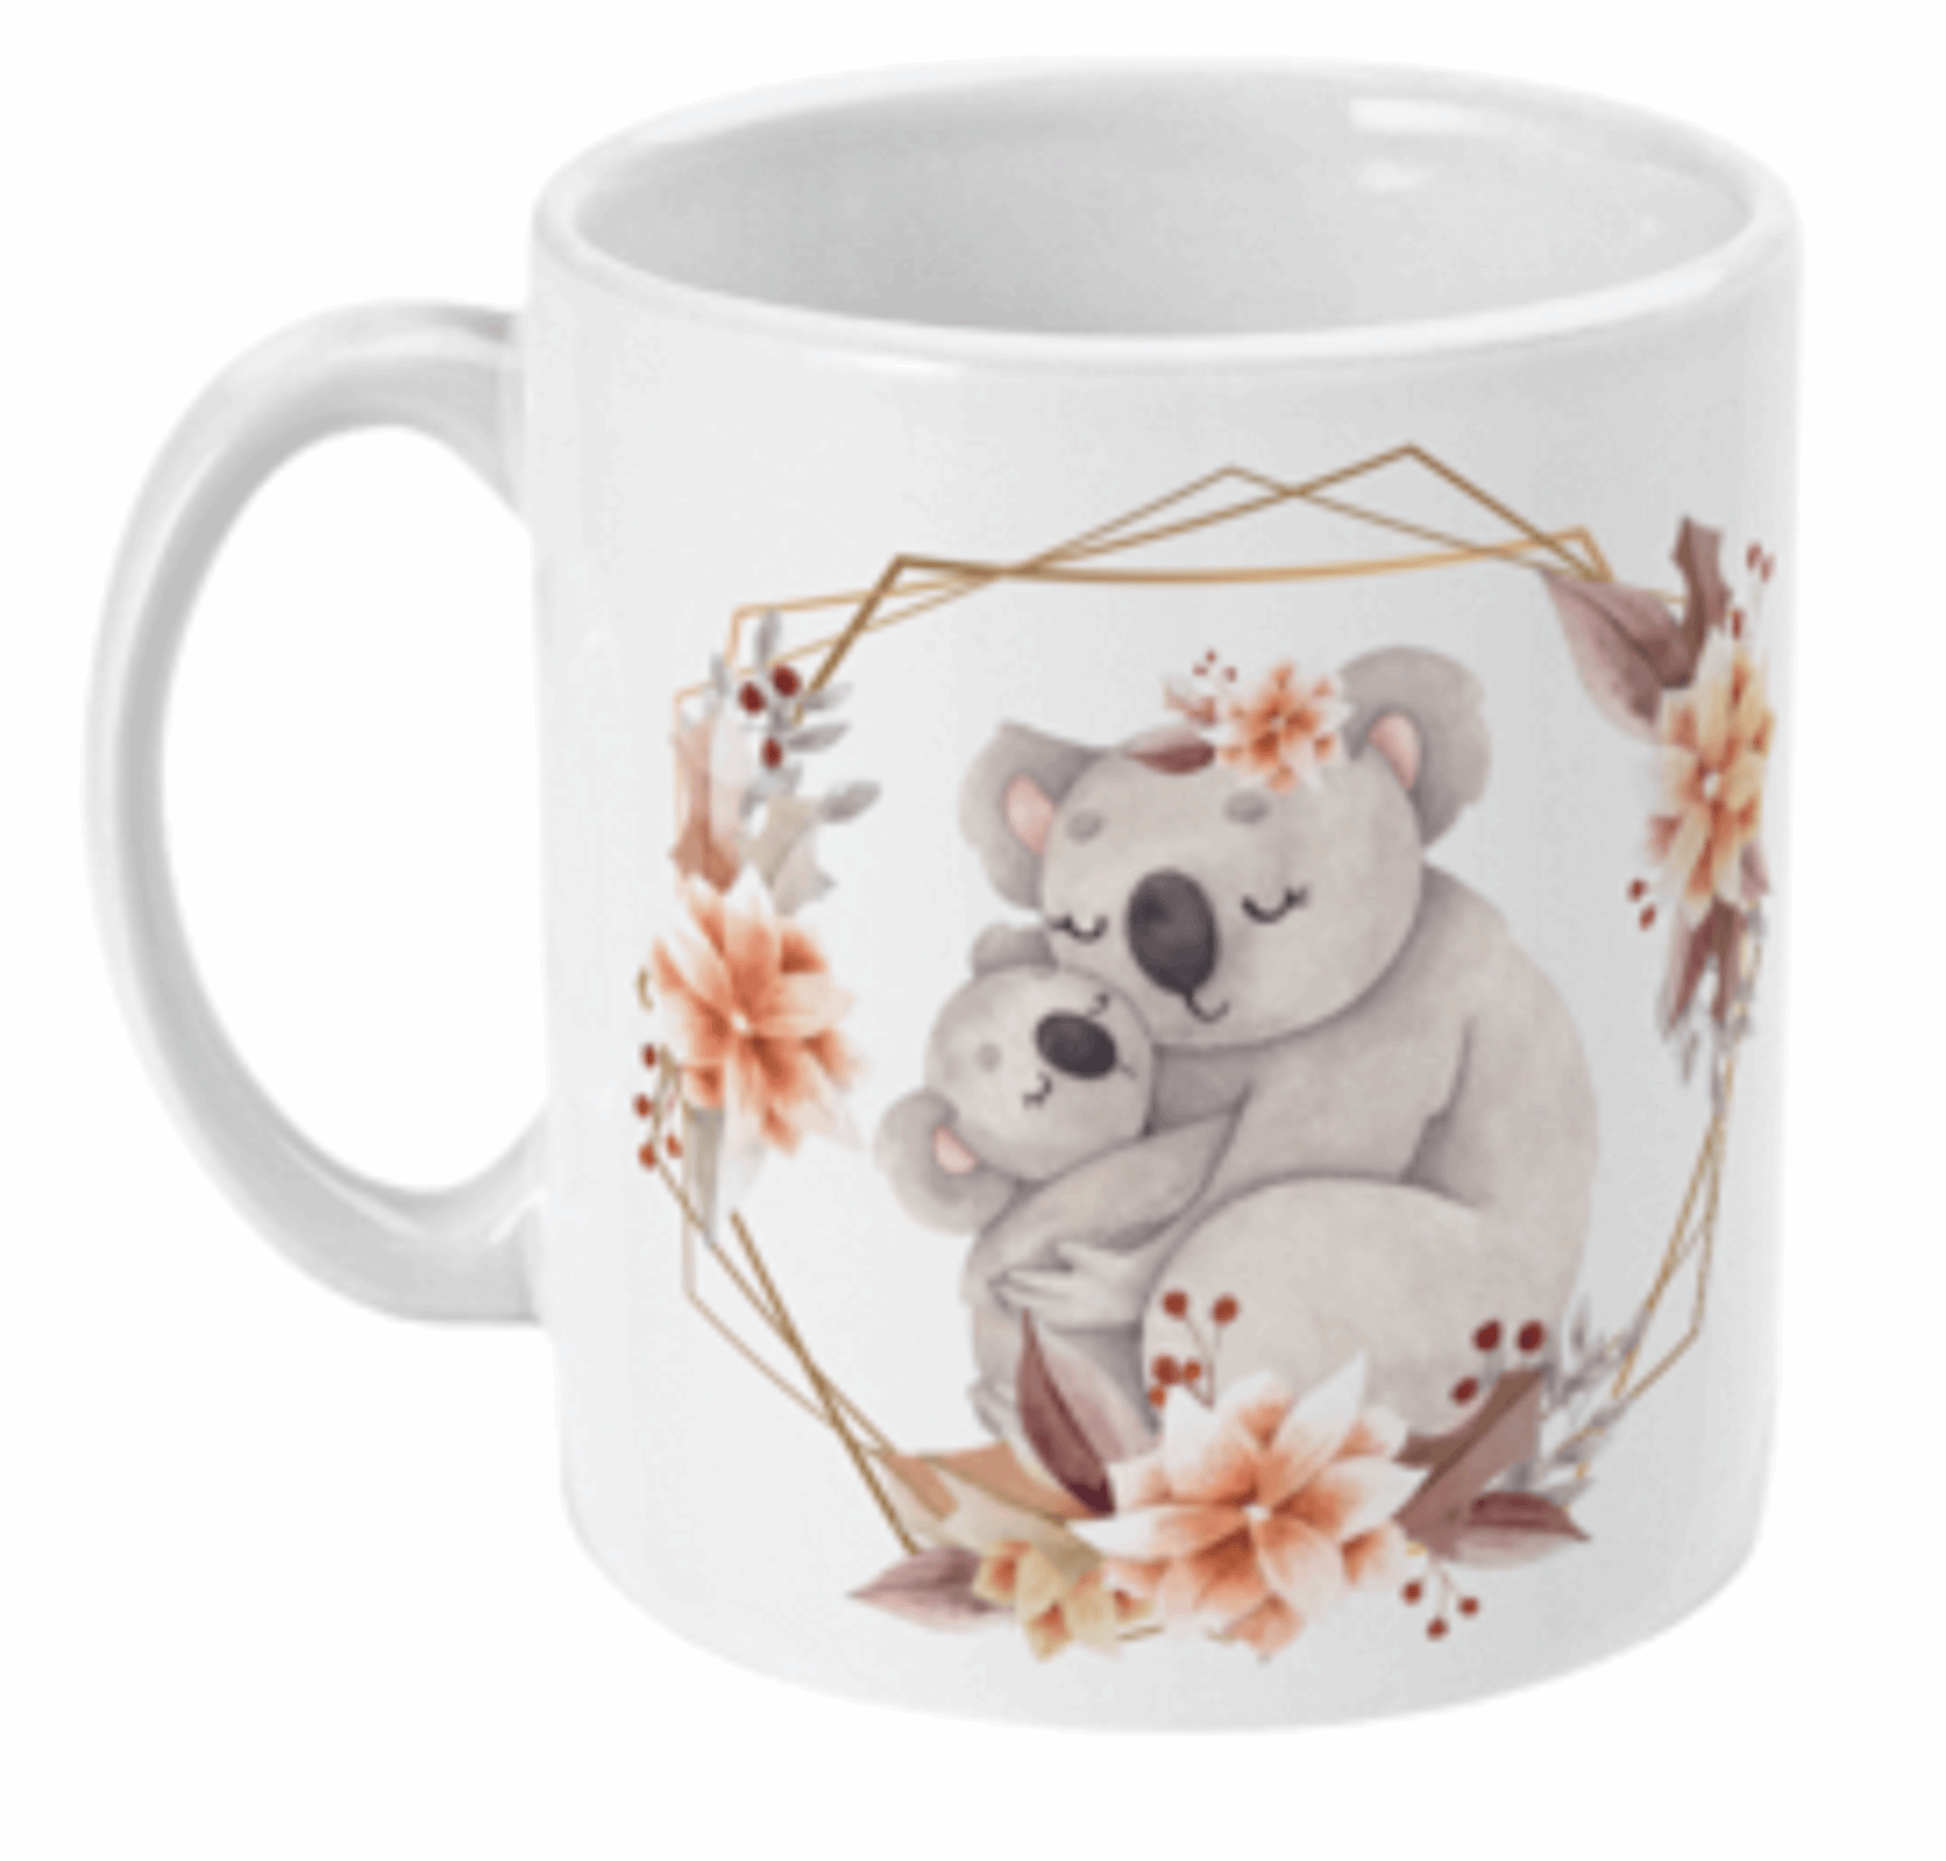  Mother Koala Bear and Baby Coffee Mug by Free Spirit Accessories sold by Free Spirit Accessories